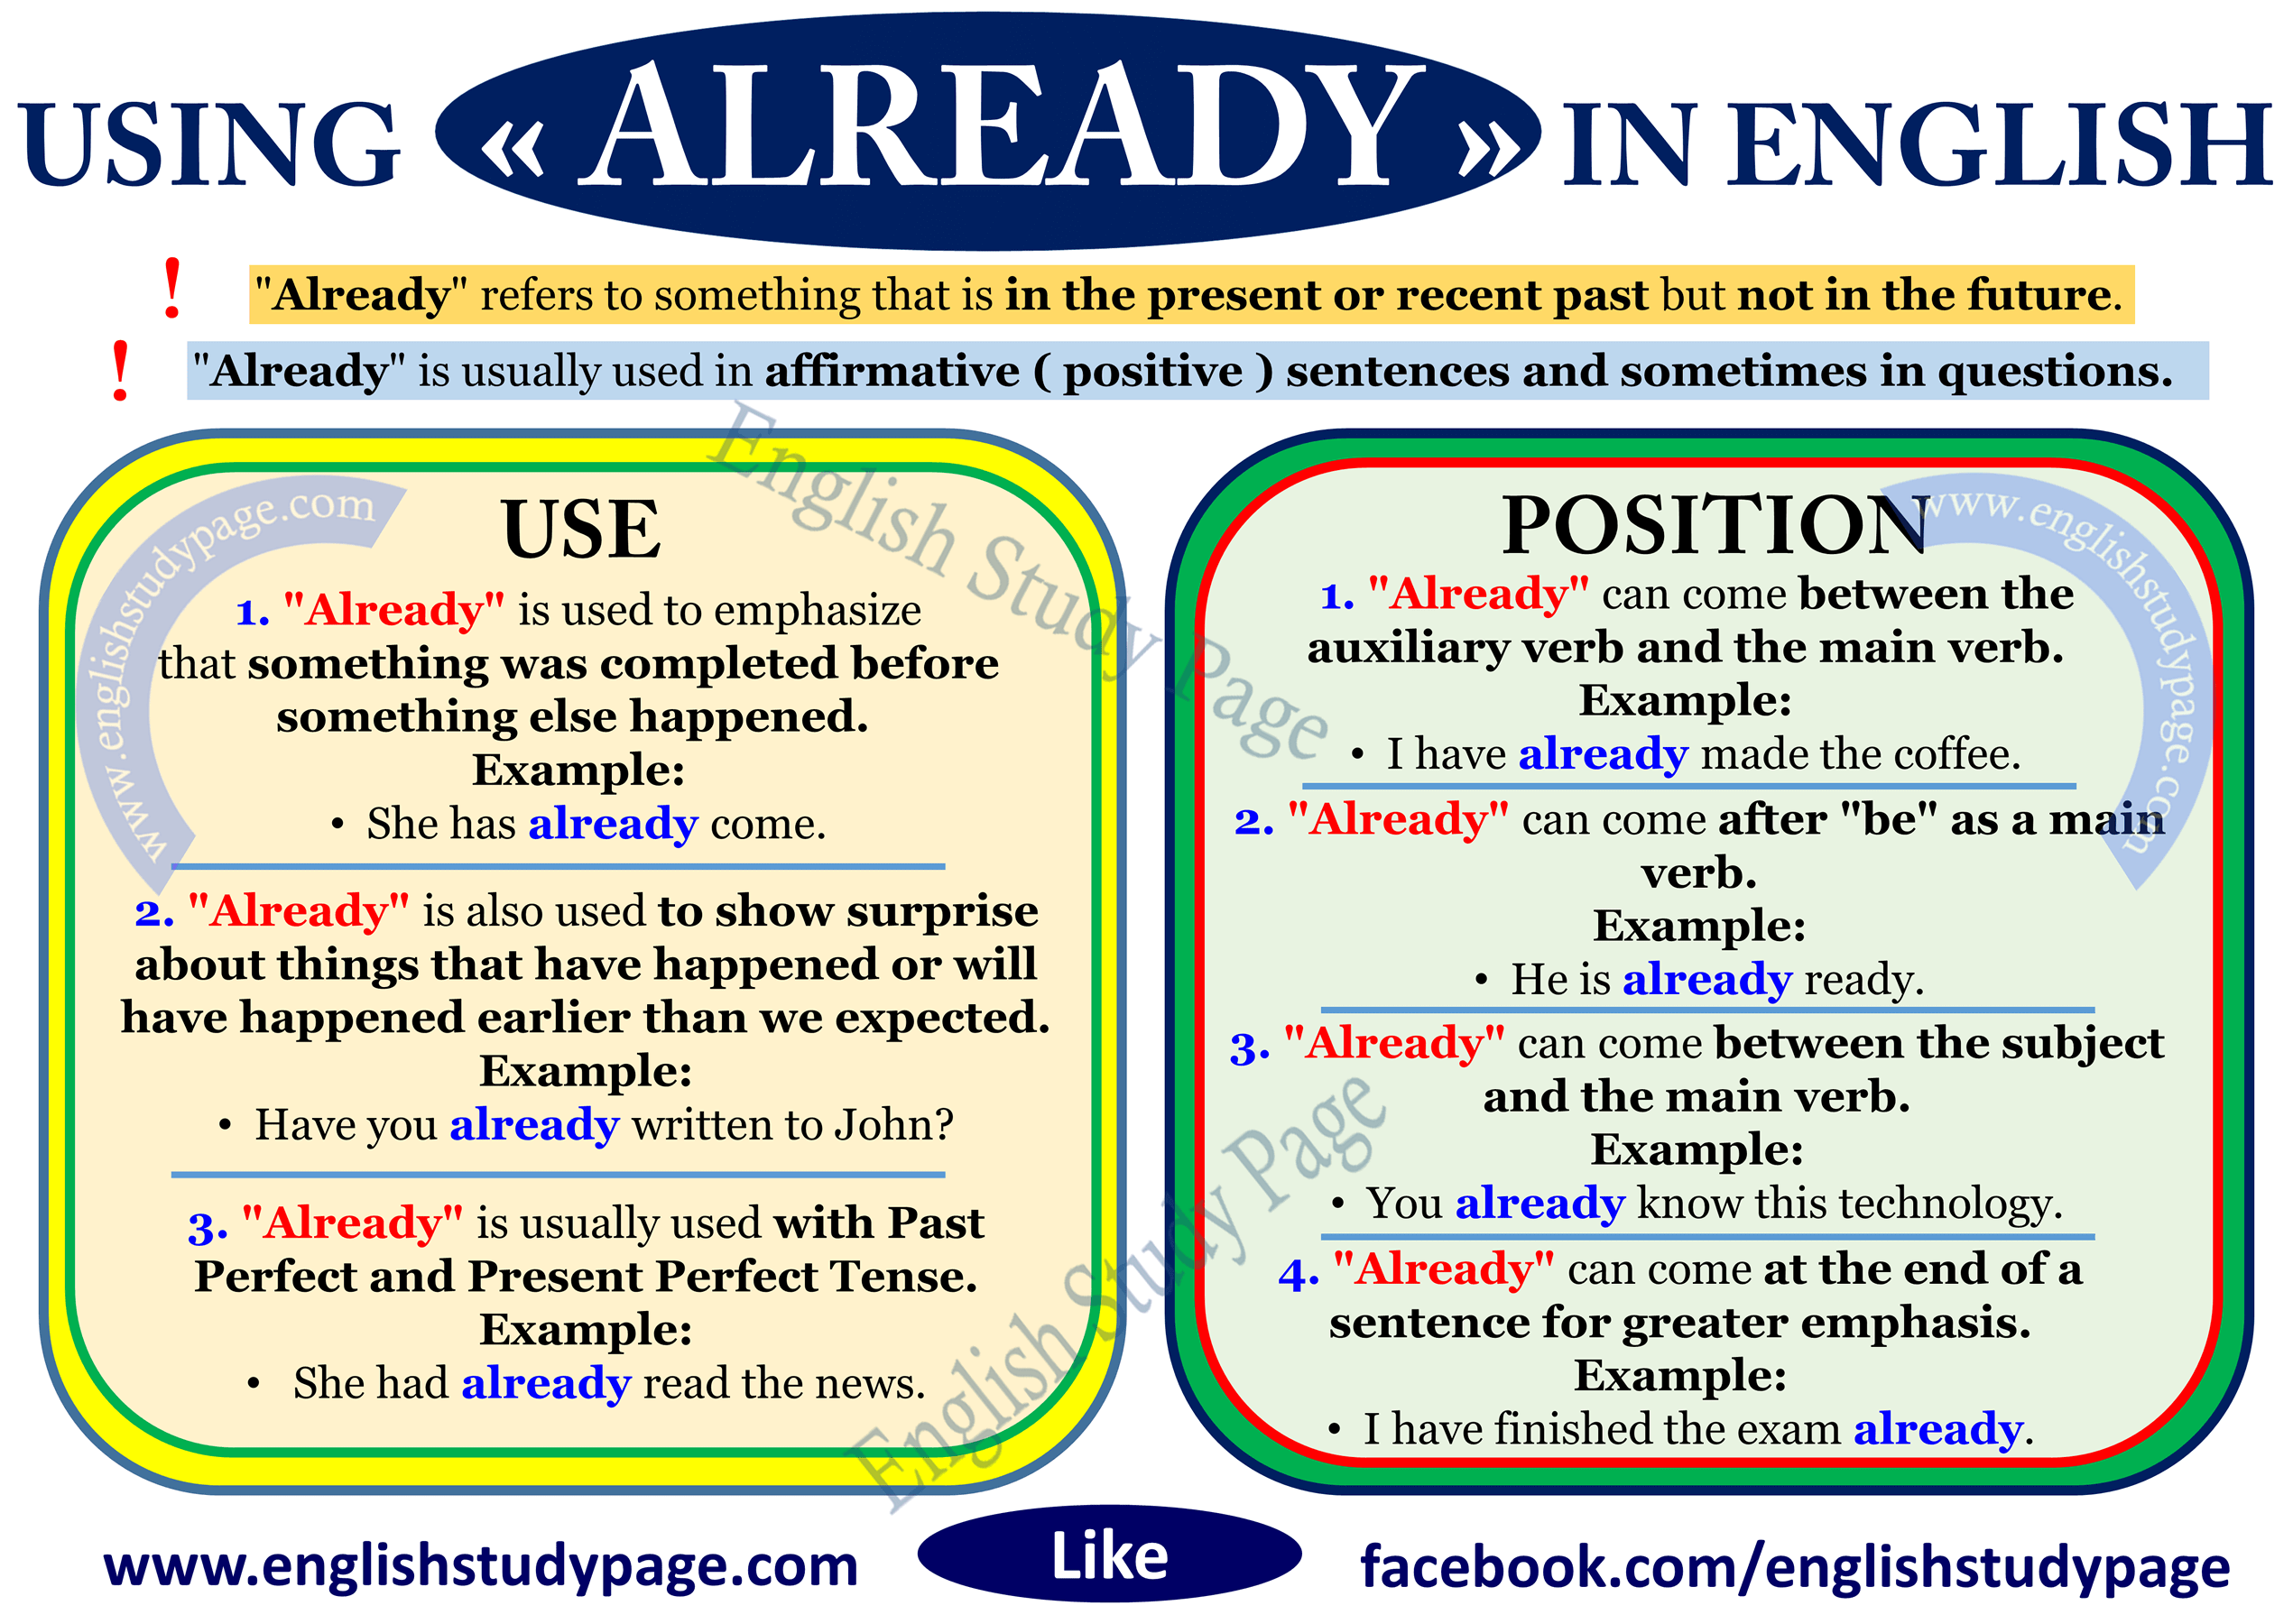 Using “ALREADY” in English